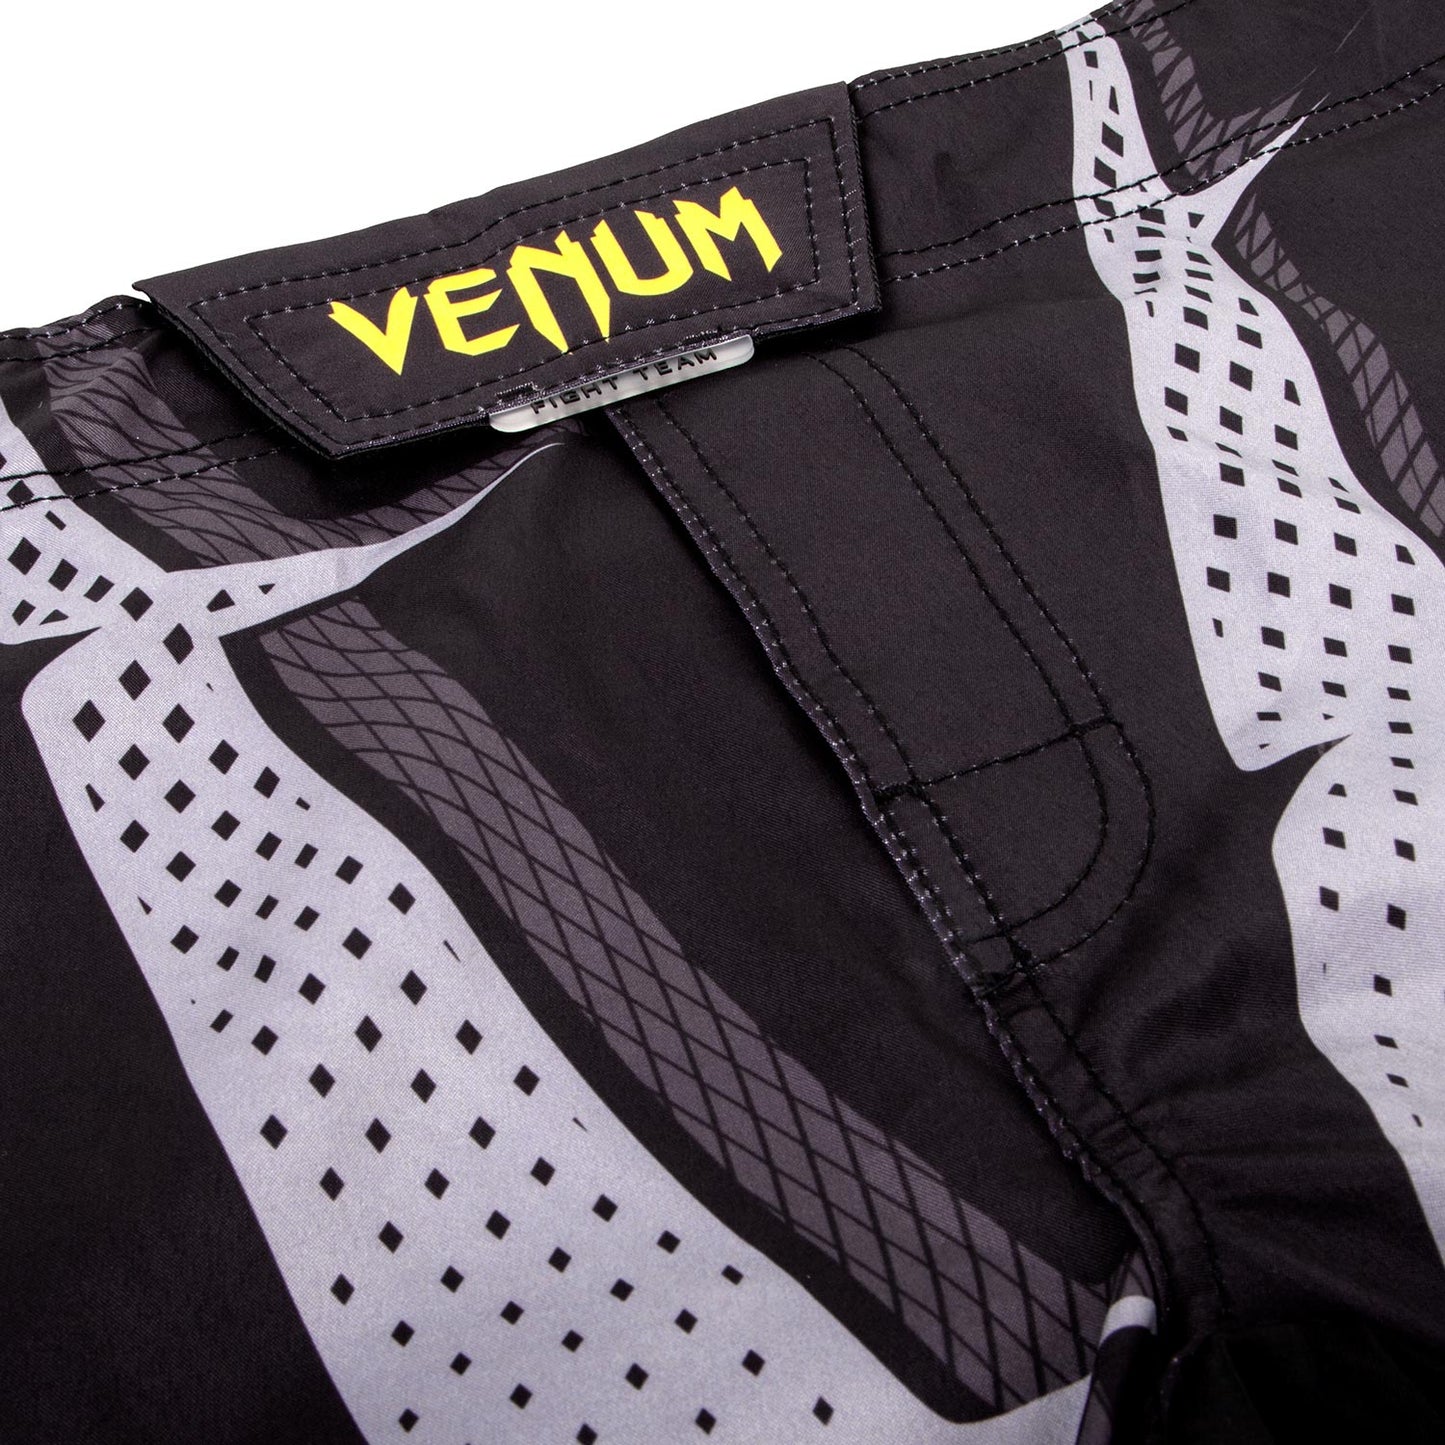 Pantalones MMA Venum Interference - Negro